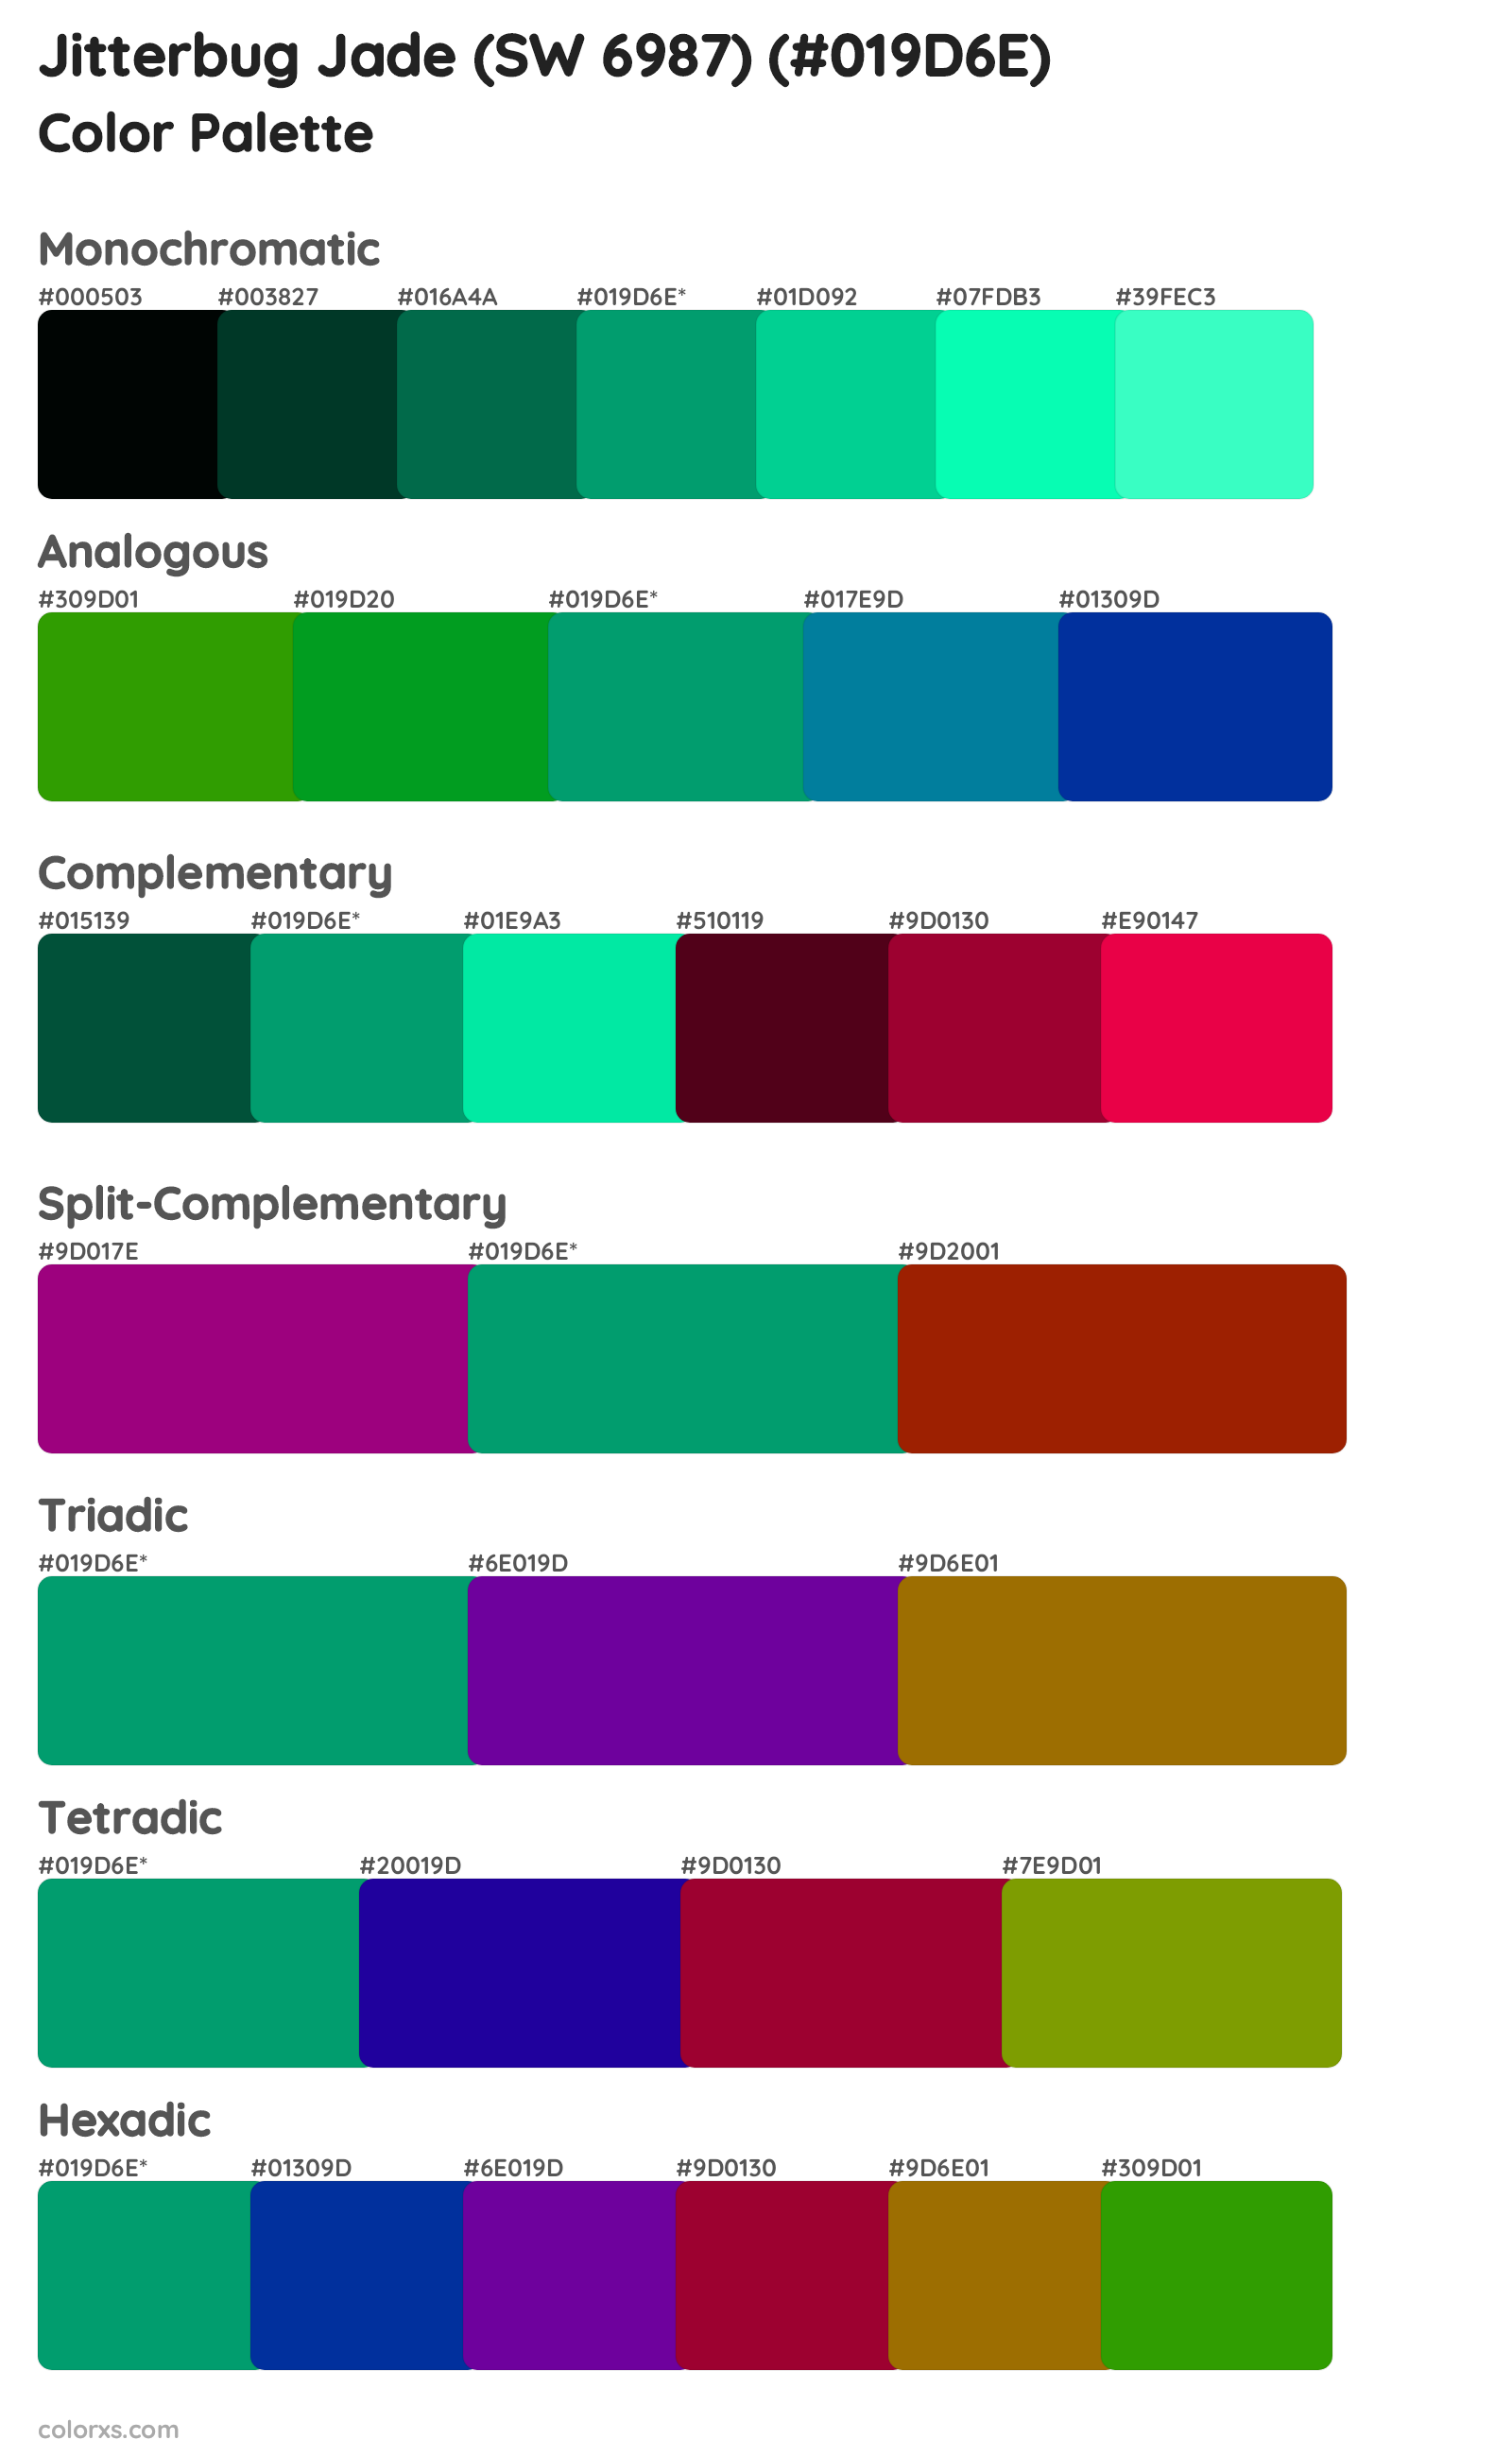 Jitterbug Jade (SW 6987) Color Scheme Palettes